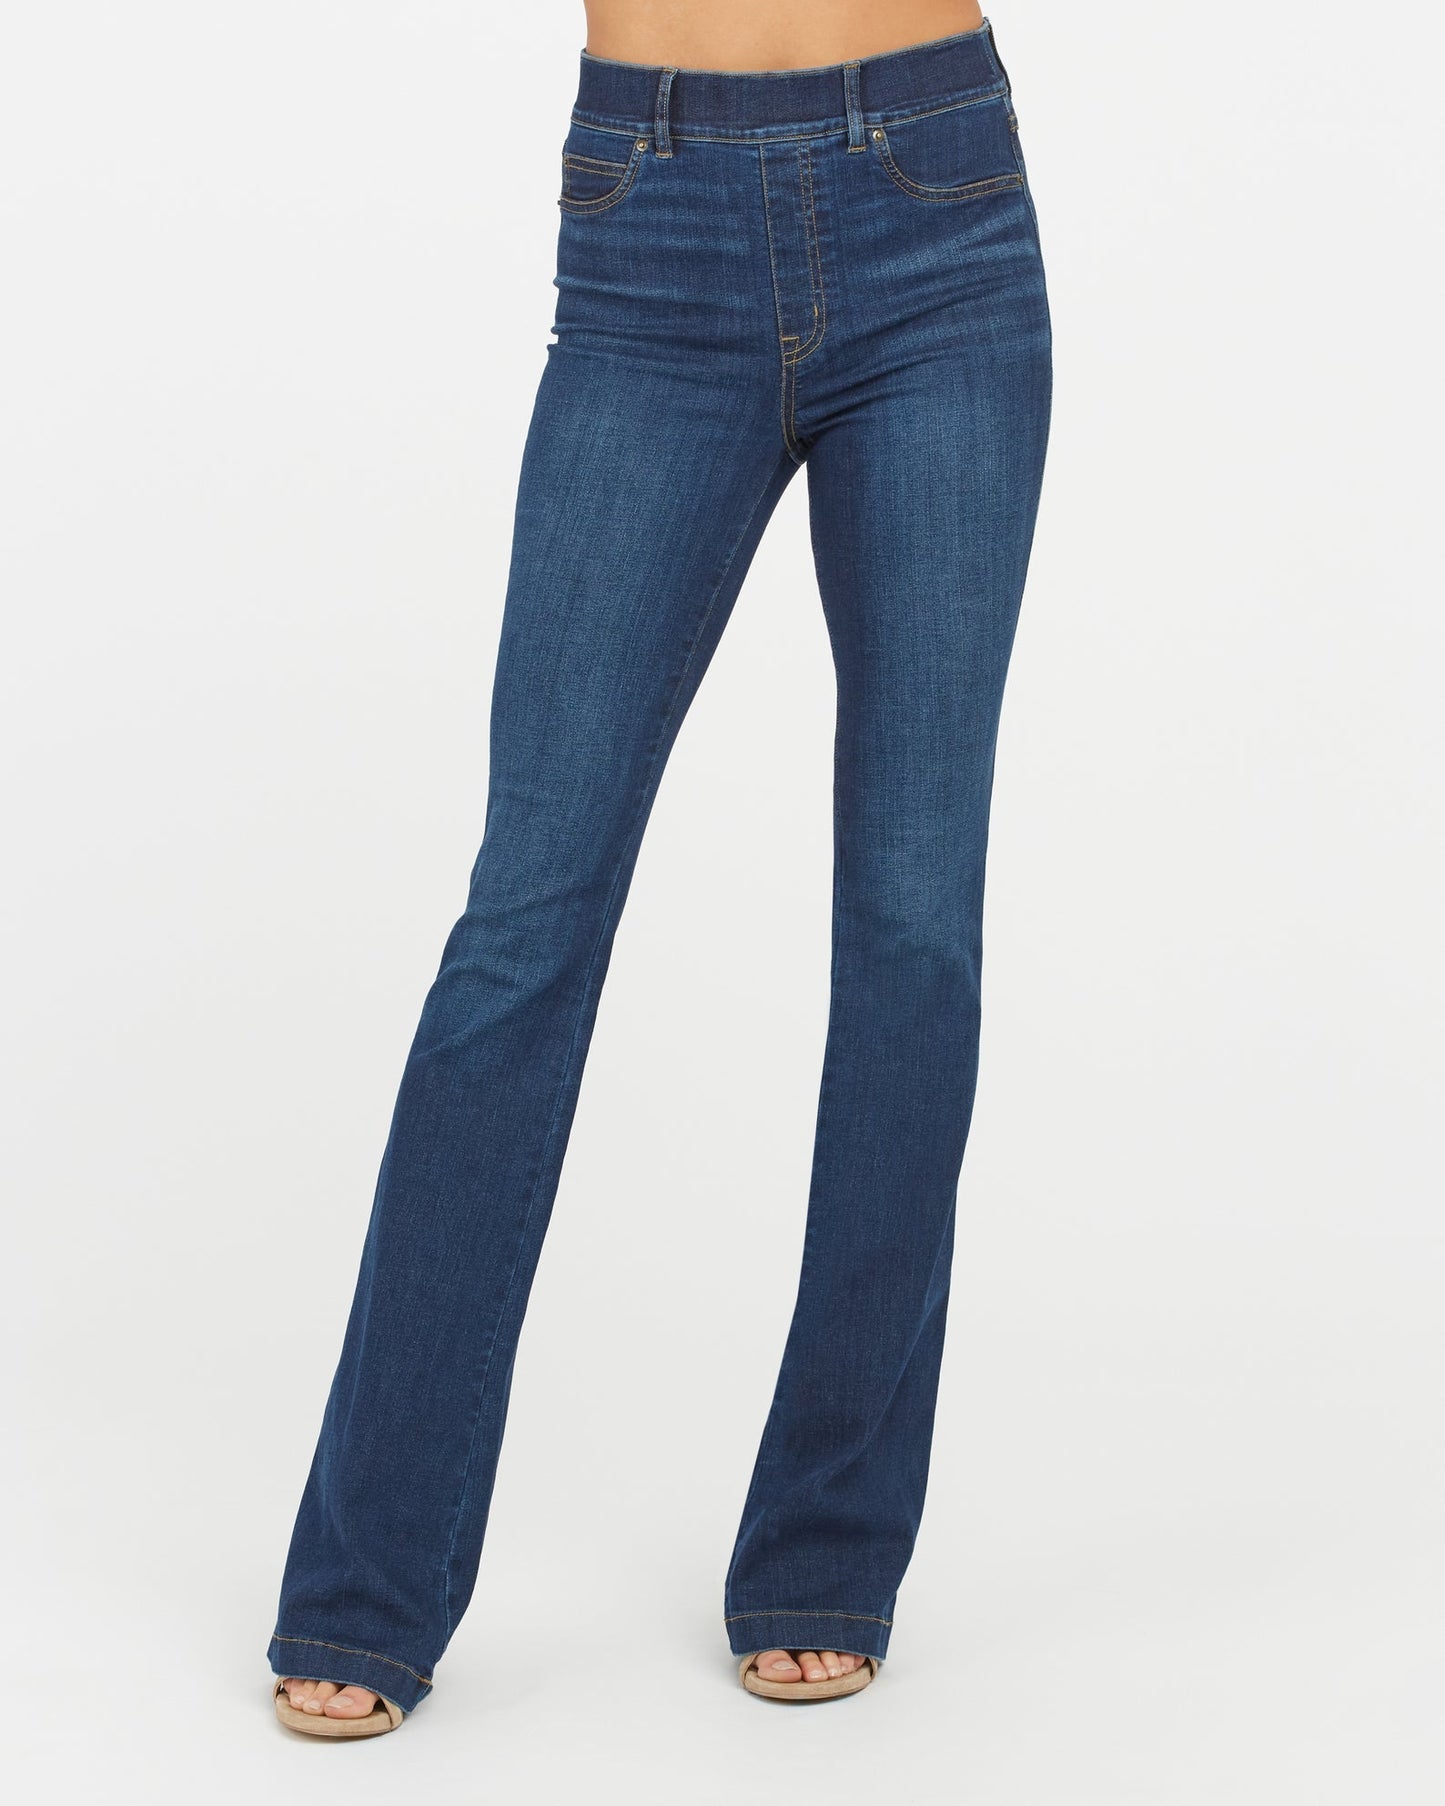 💕Hot Sale 50% OFF🔥Women's Flare Skinny Jeans